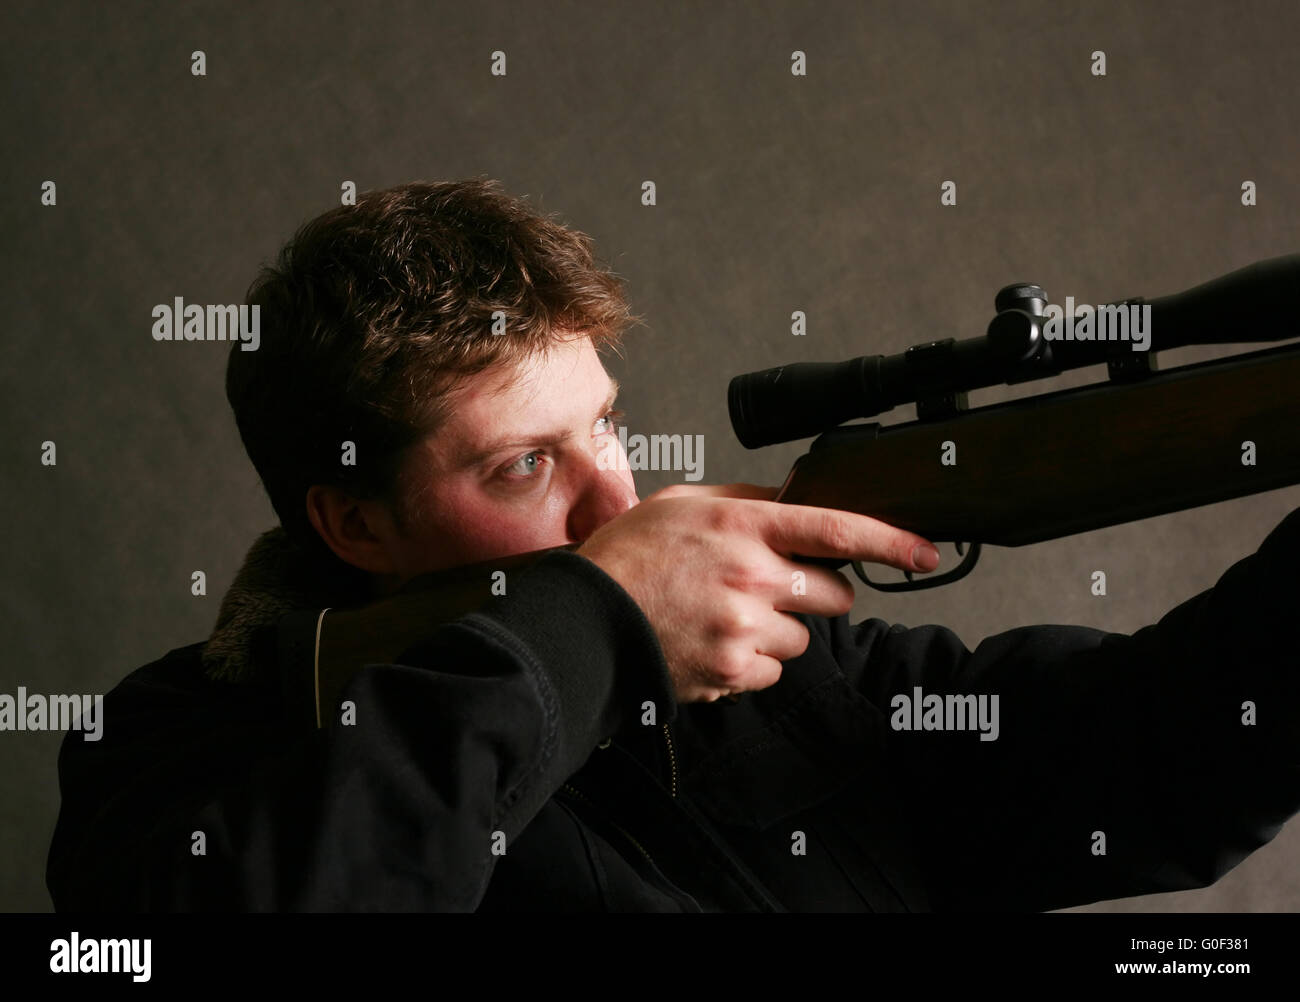 Man with a gun Stock Photo